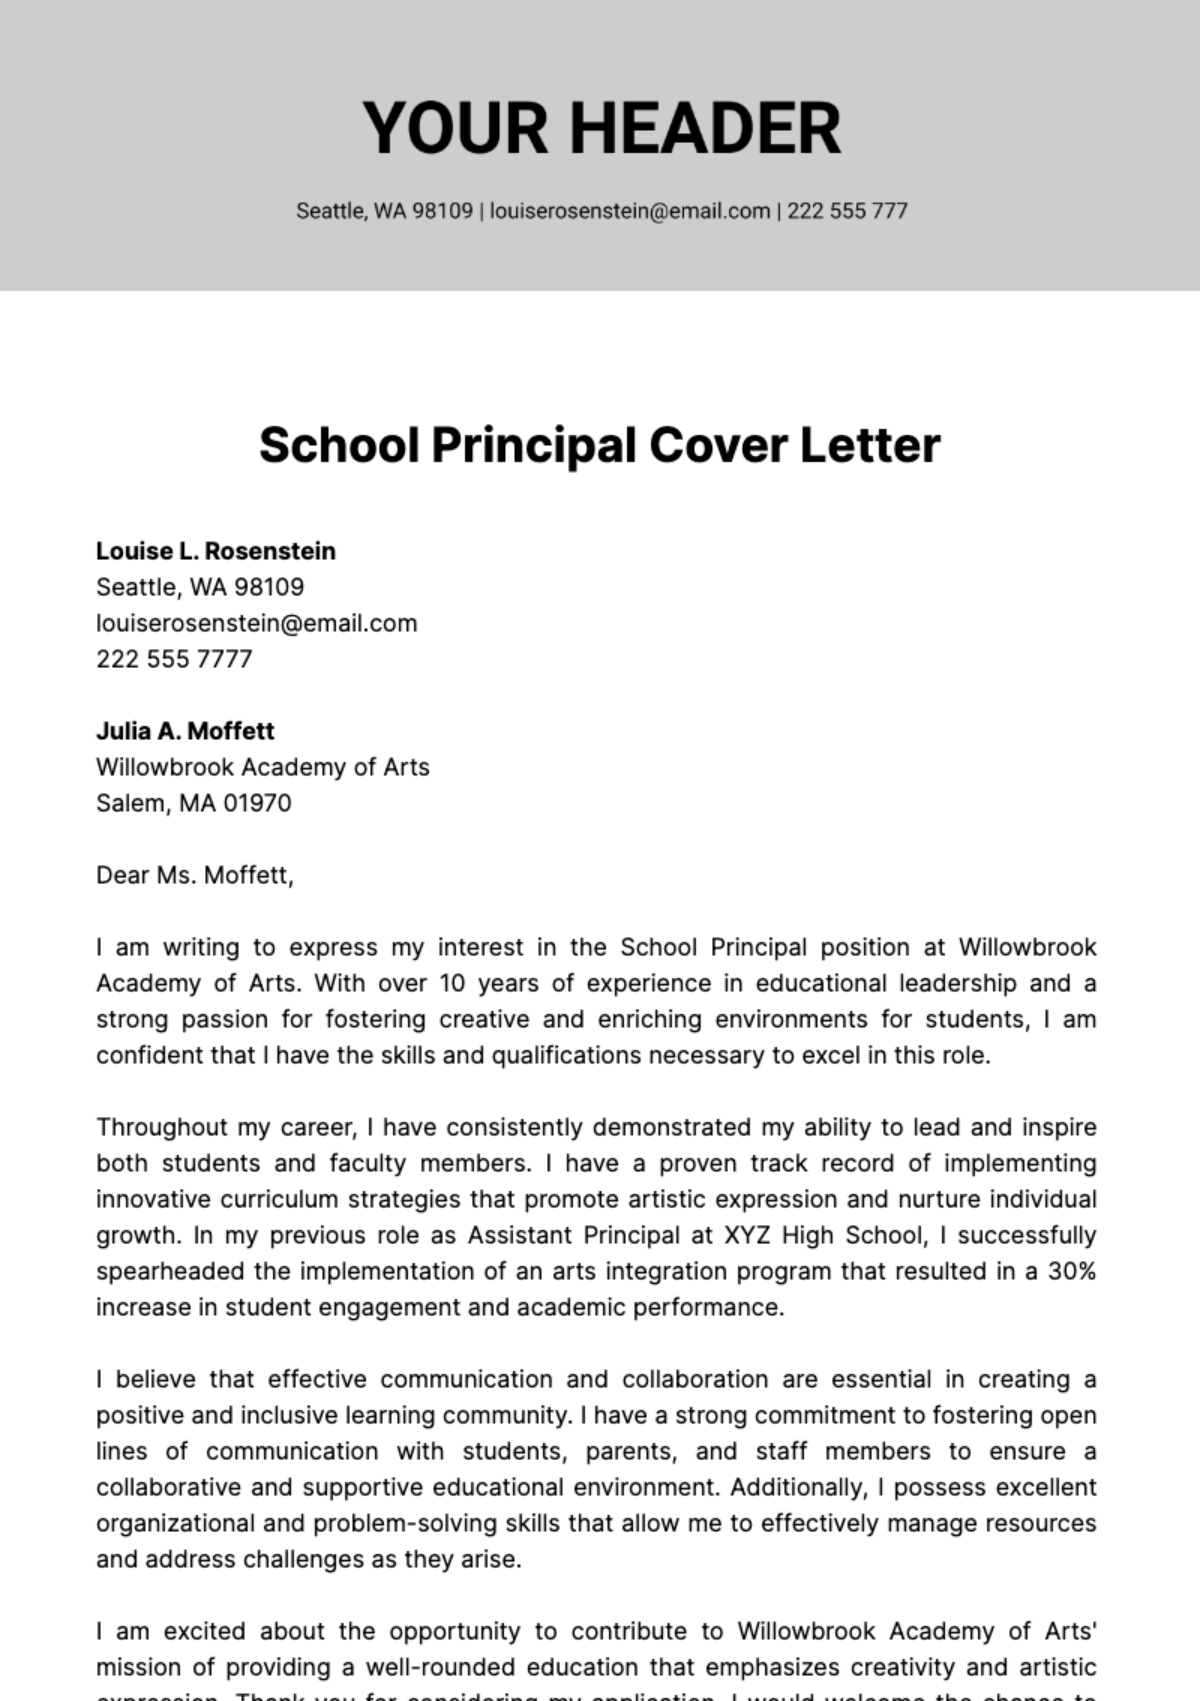 Free School Principal Cover Letter  Template